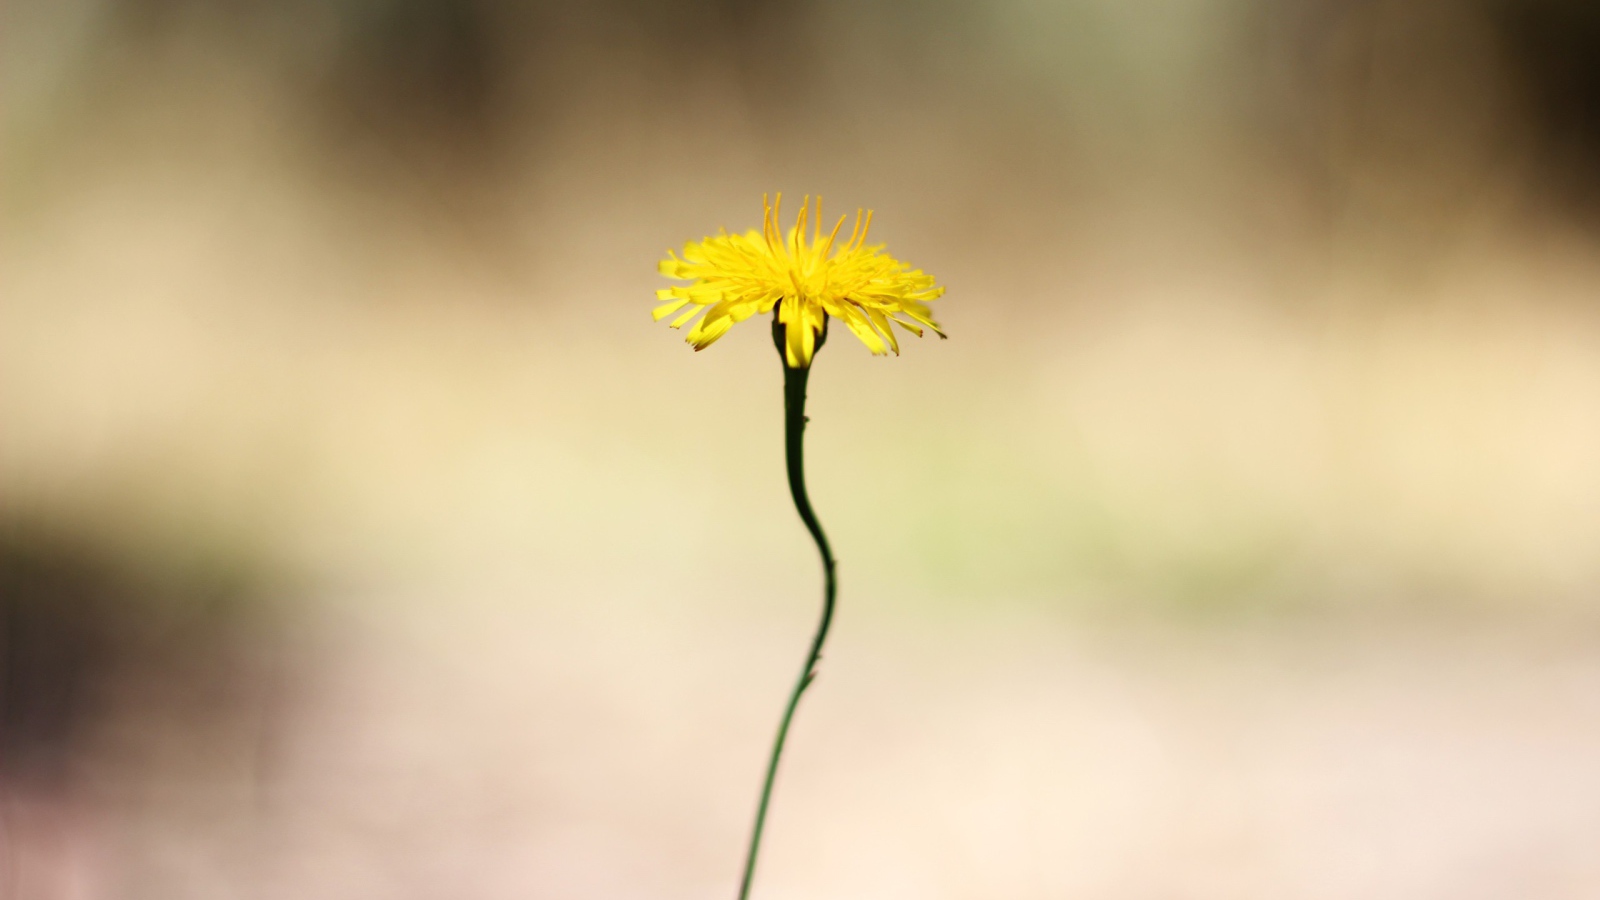 Желтый цветок на тонком стебле